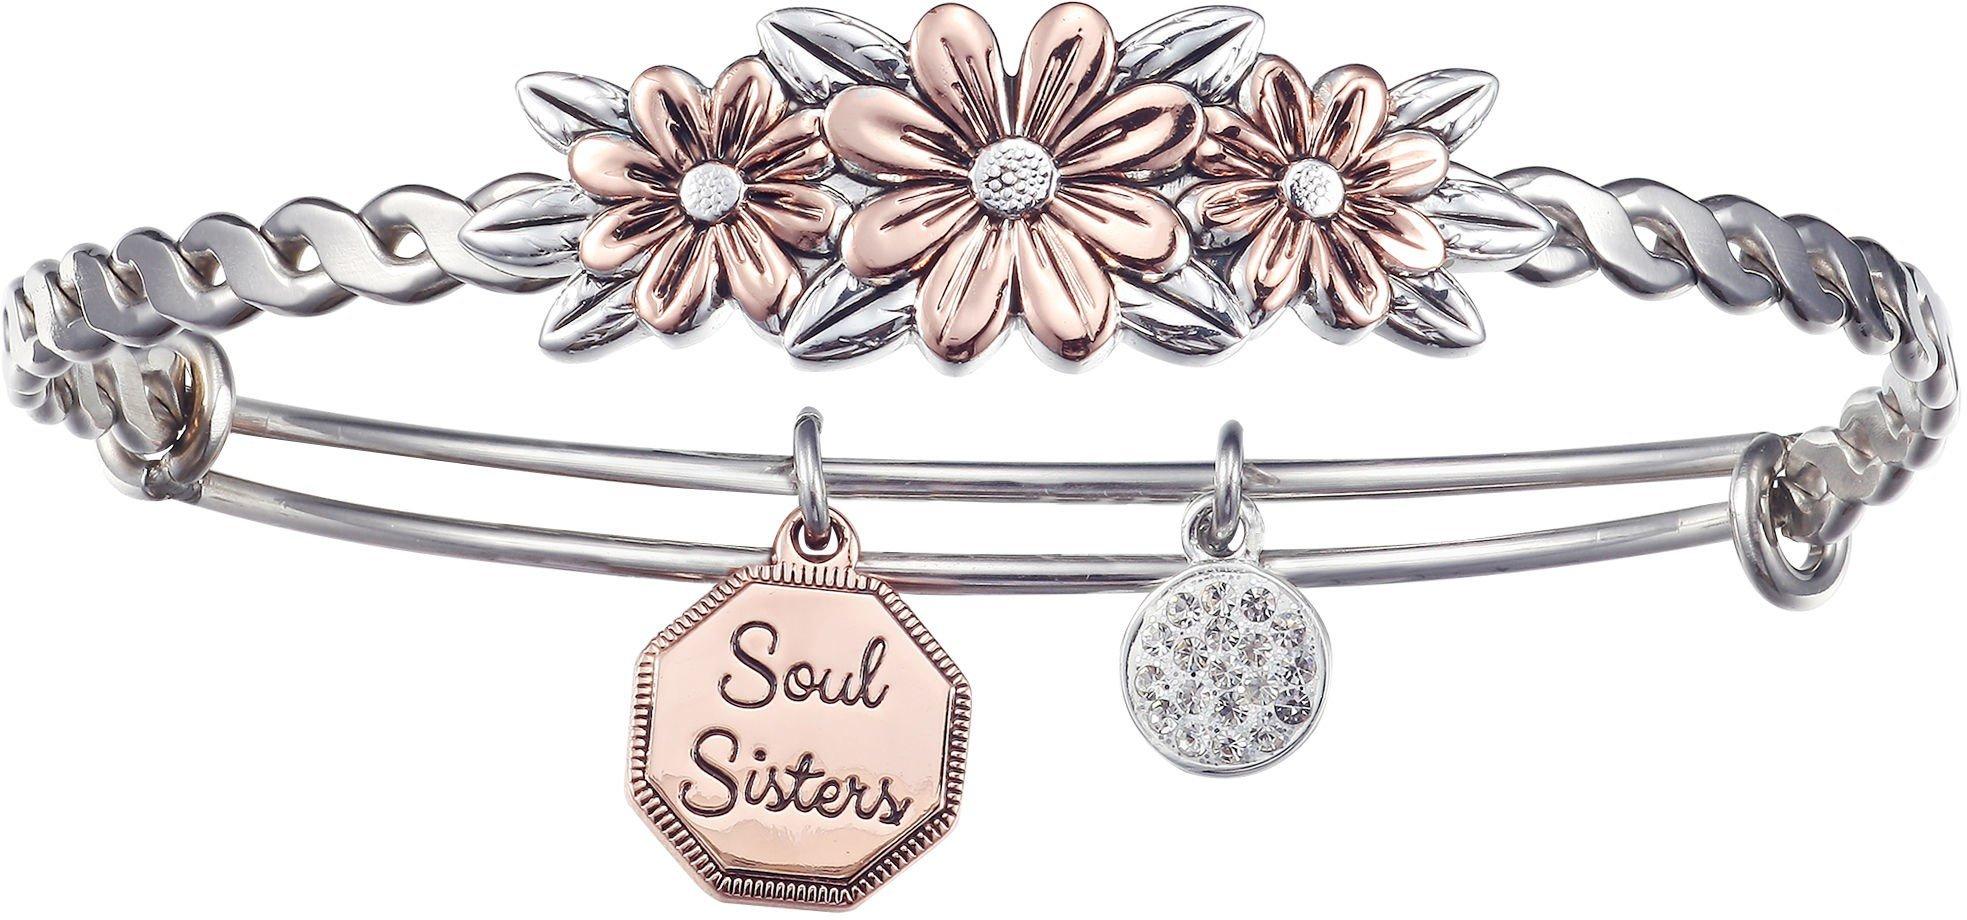 Soul Sisters Floral Twist Bangle Bracelet